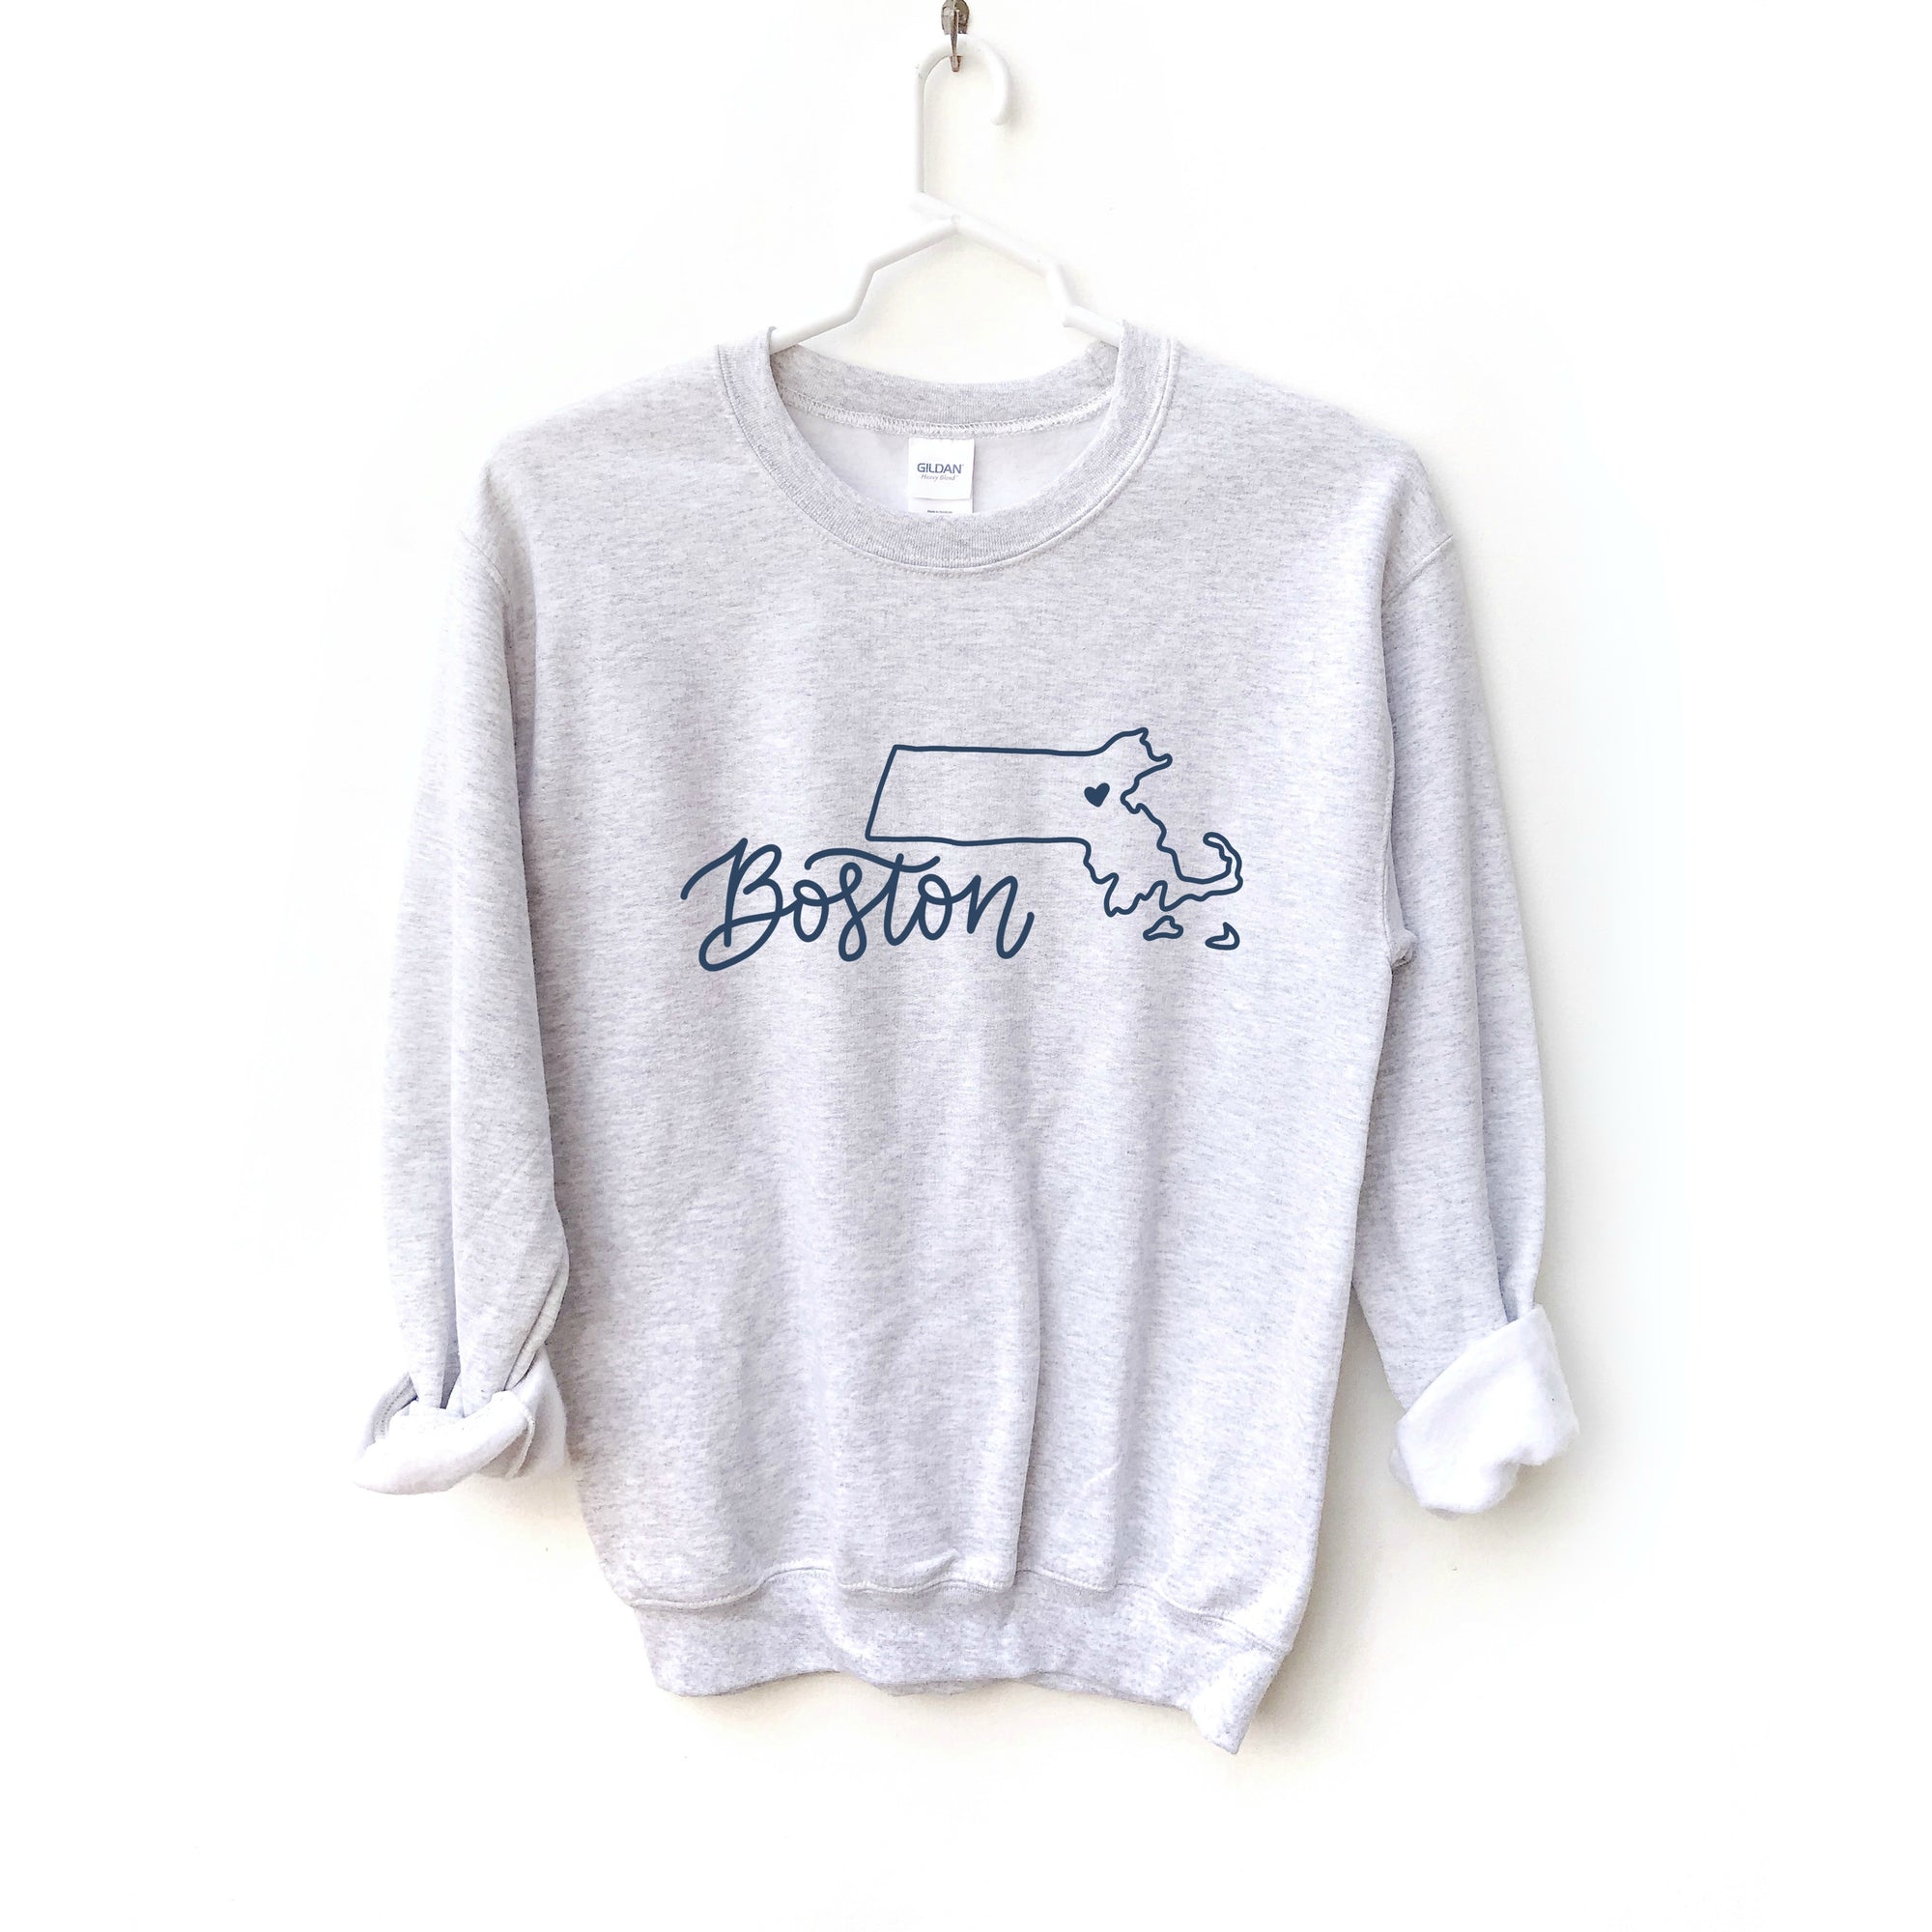 Boston Heart Crewneck Sweatshirt